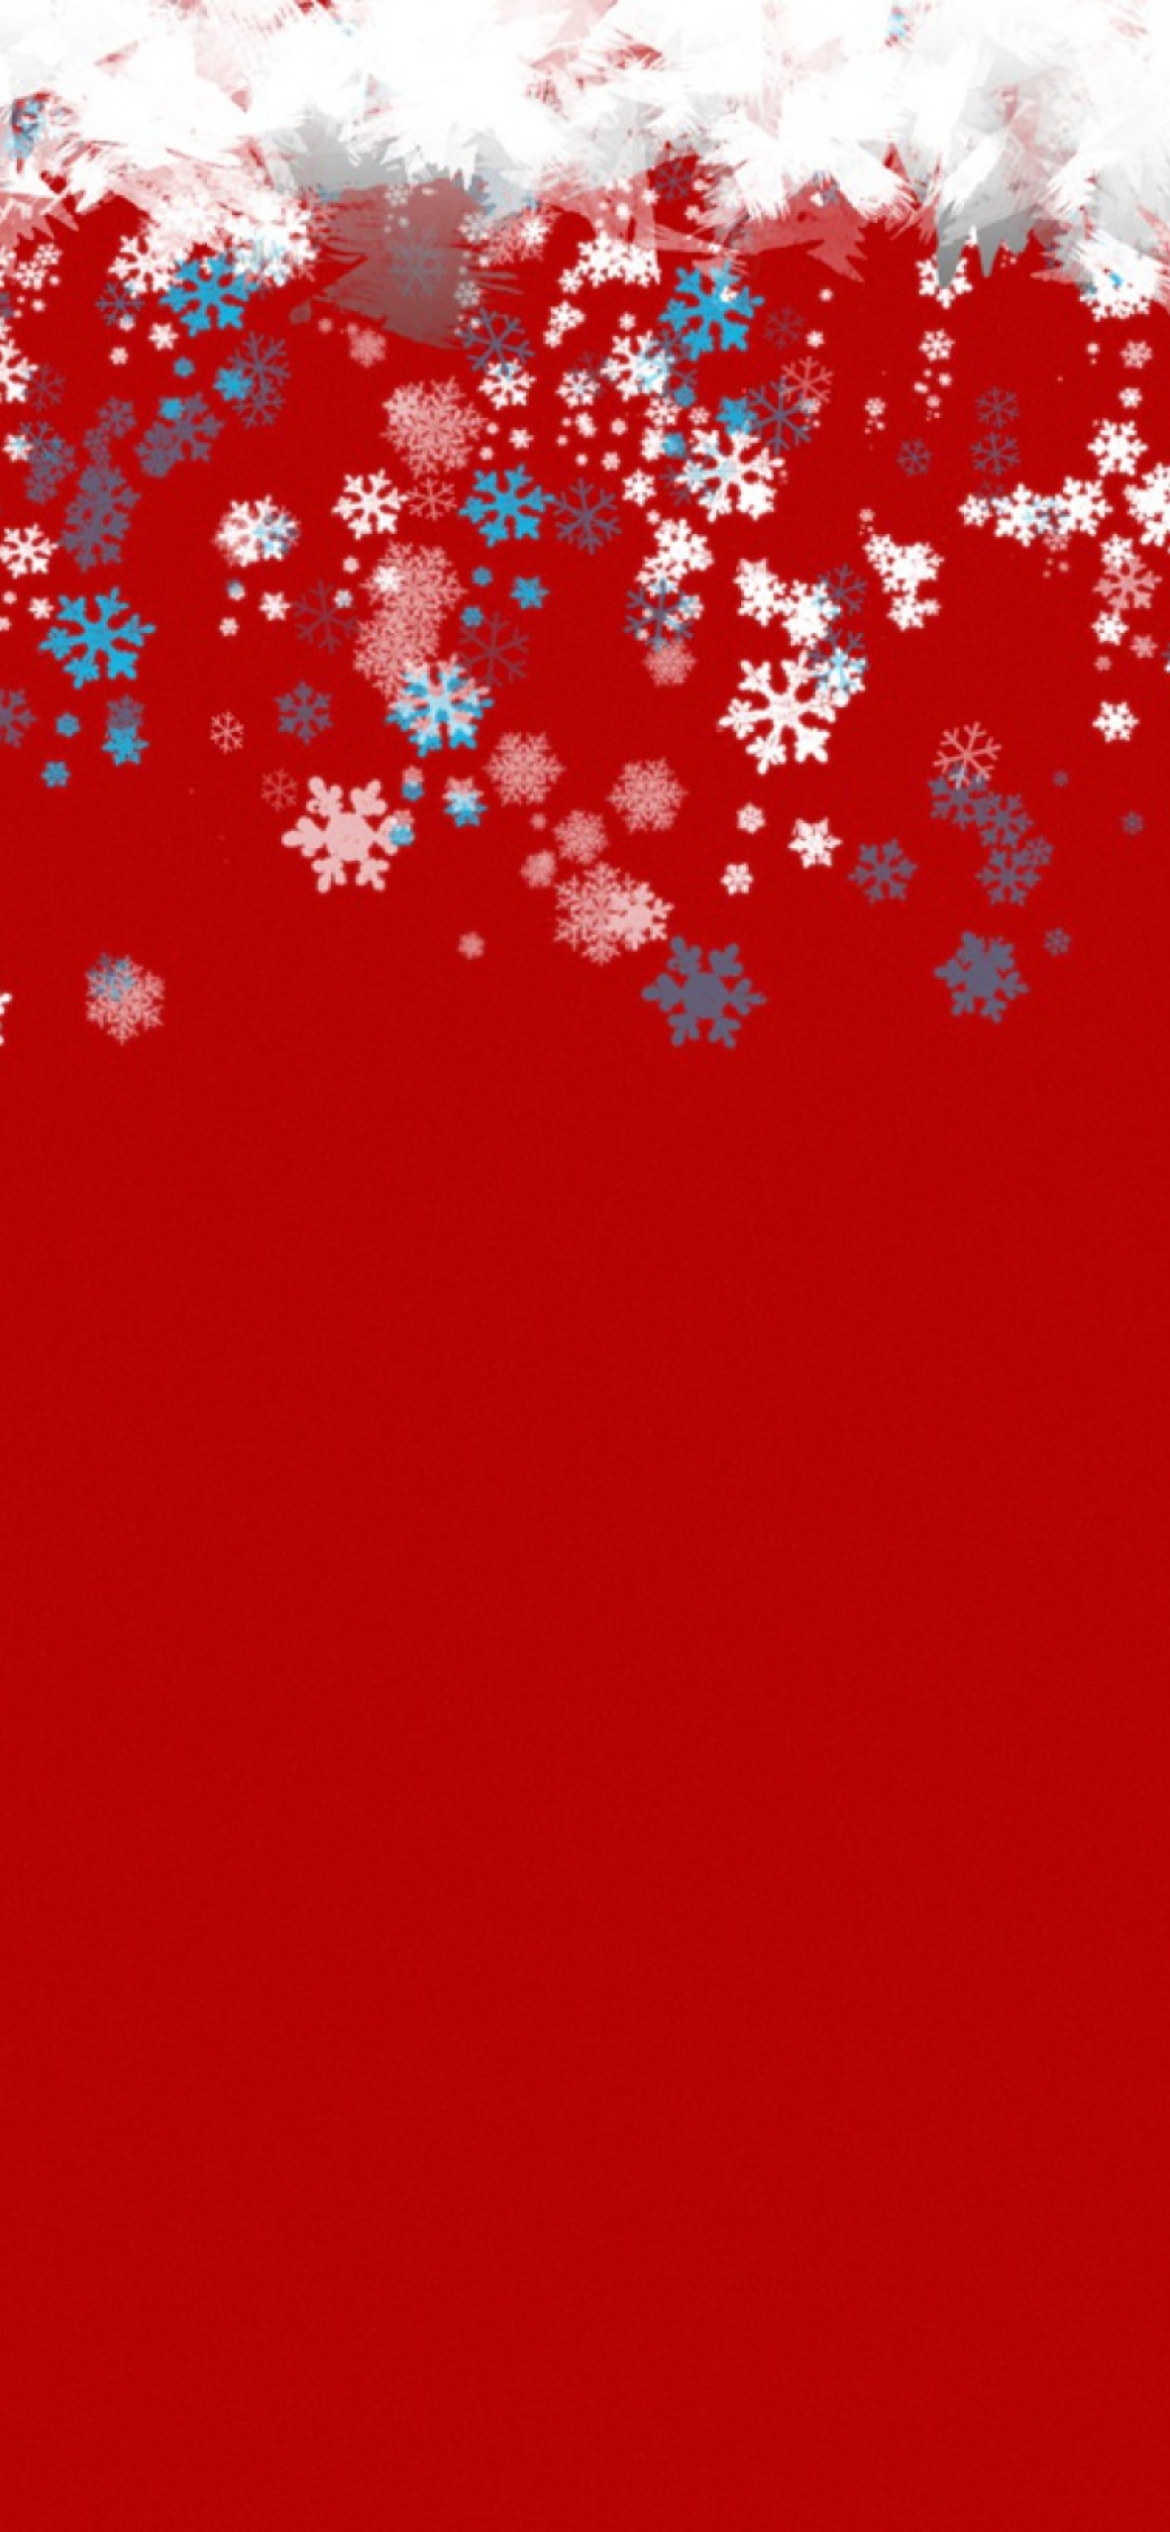 Snowflakes wallpaper 1170x2532